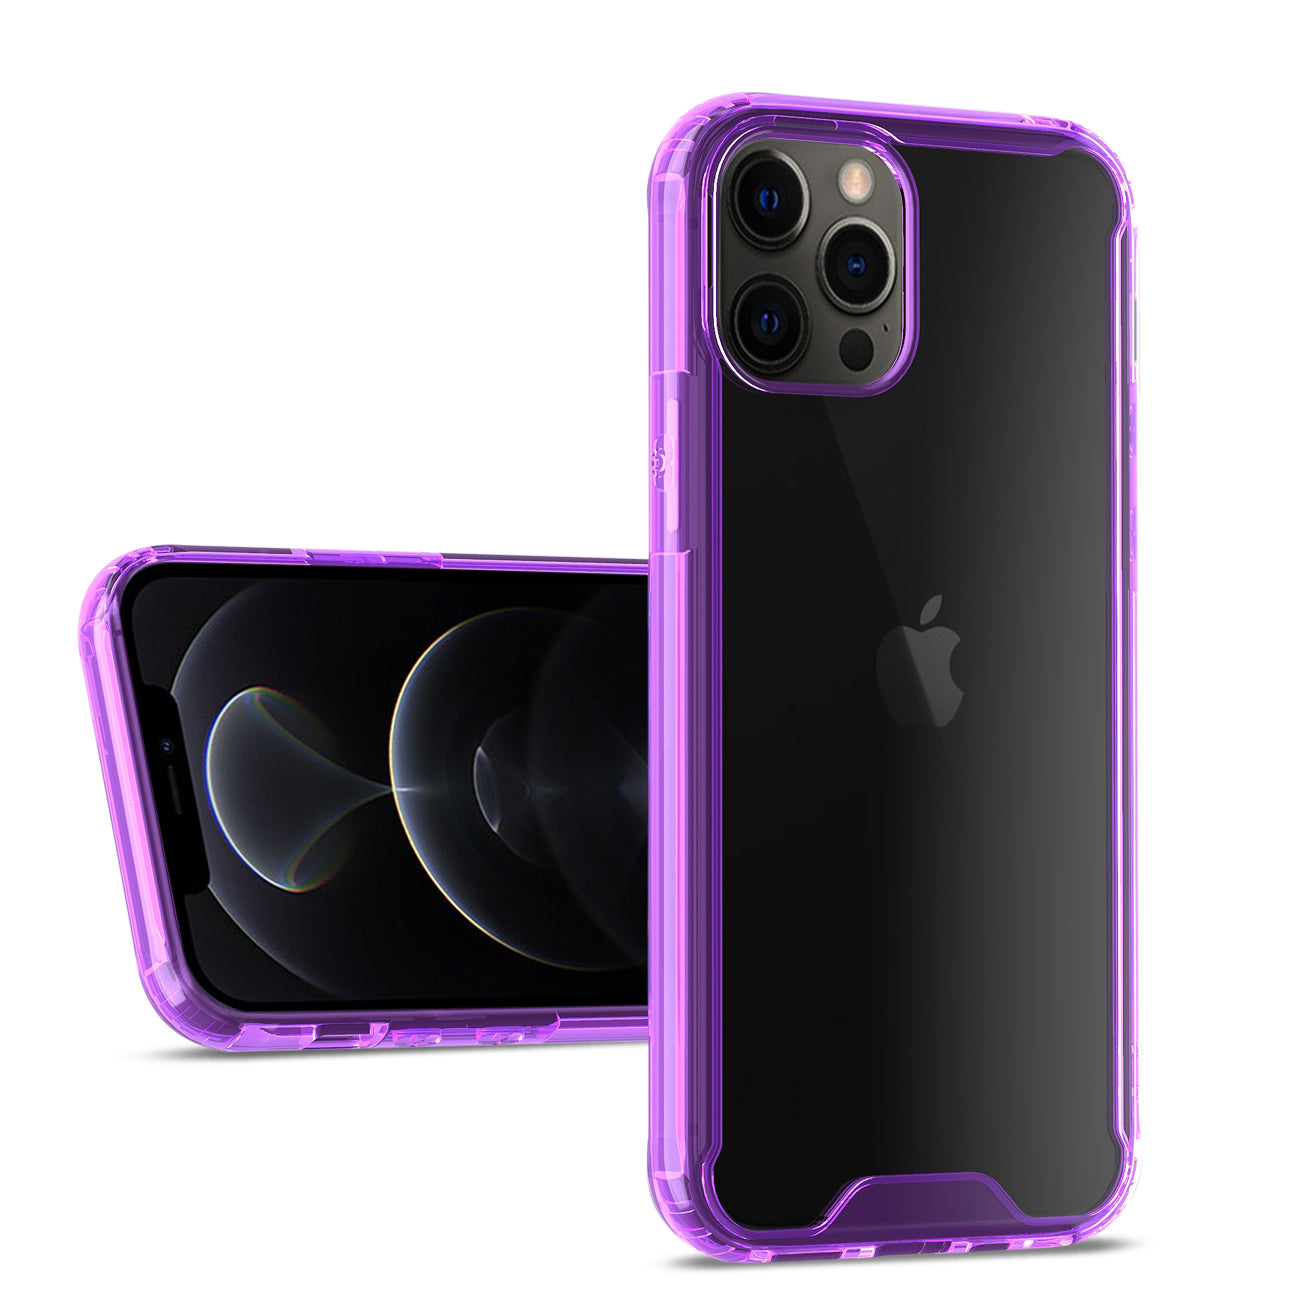 IPHONE 12 PRO MAX Bumper Case In Purple